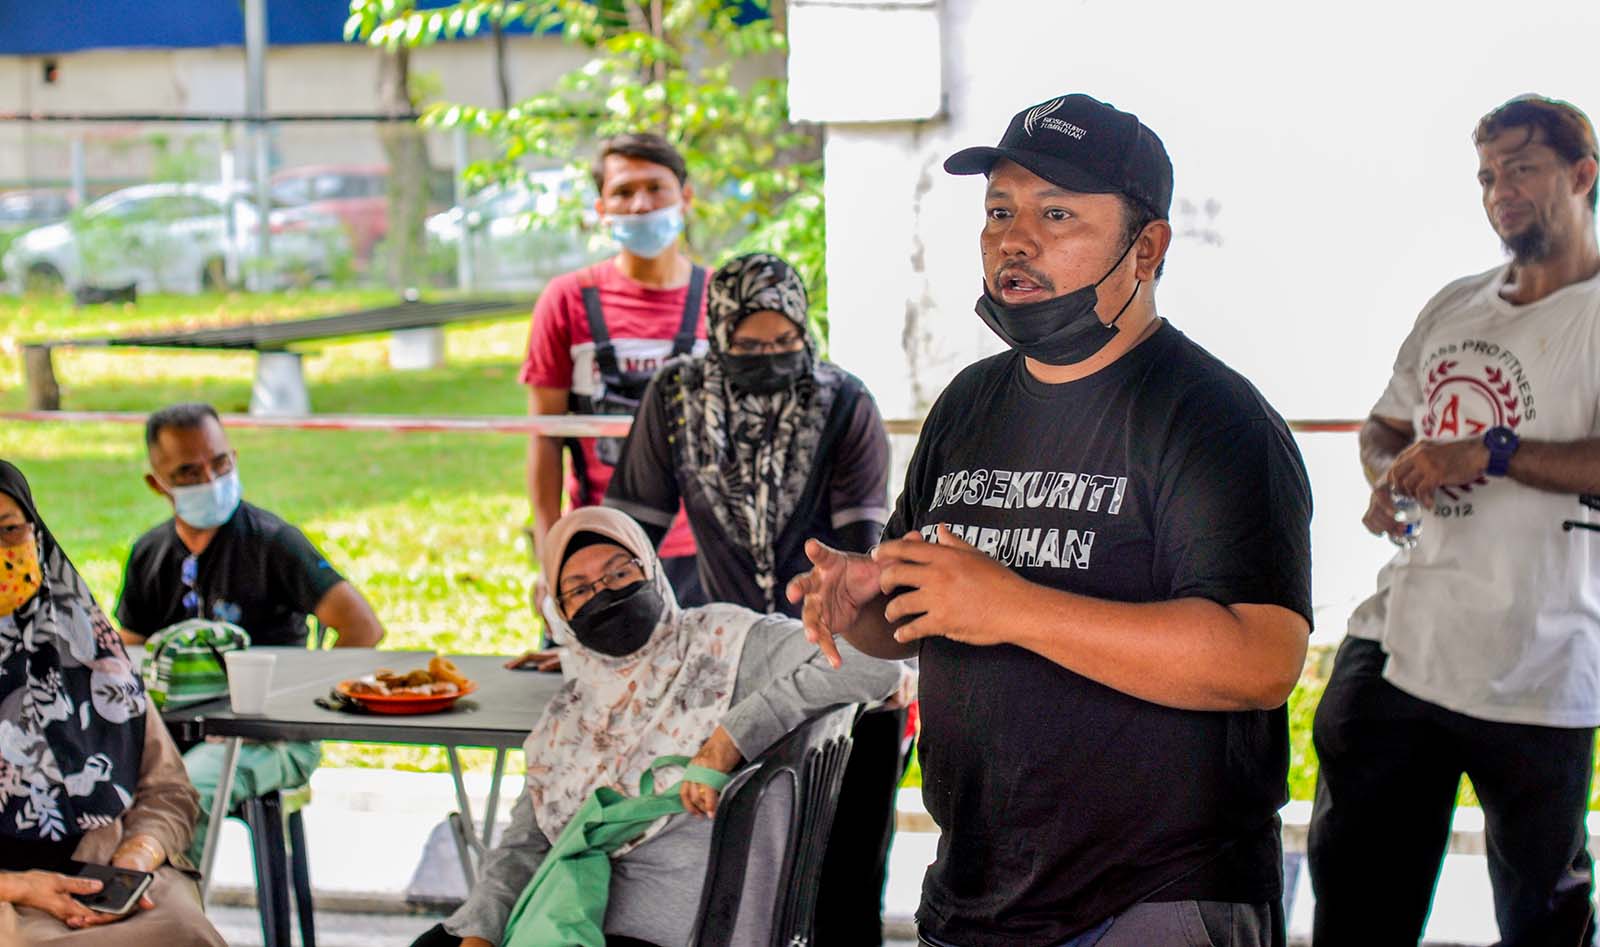 Food security is an urgent matter, says Mohd Rashdan from LA21 Kuala Lumpur. (Tan Kai Ren)